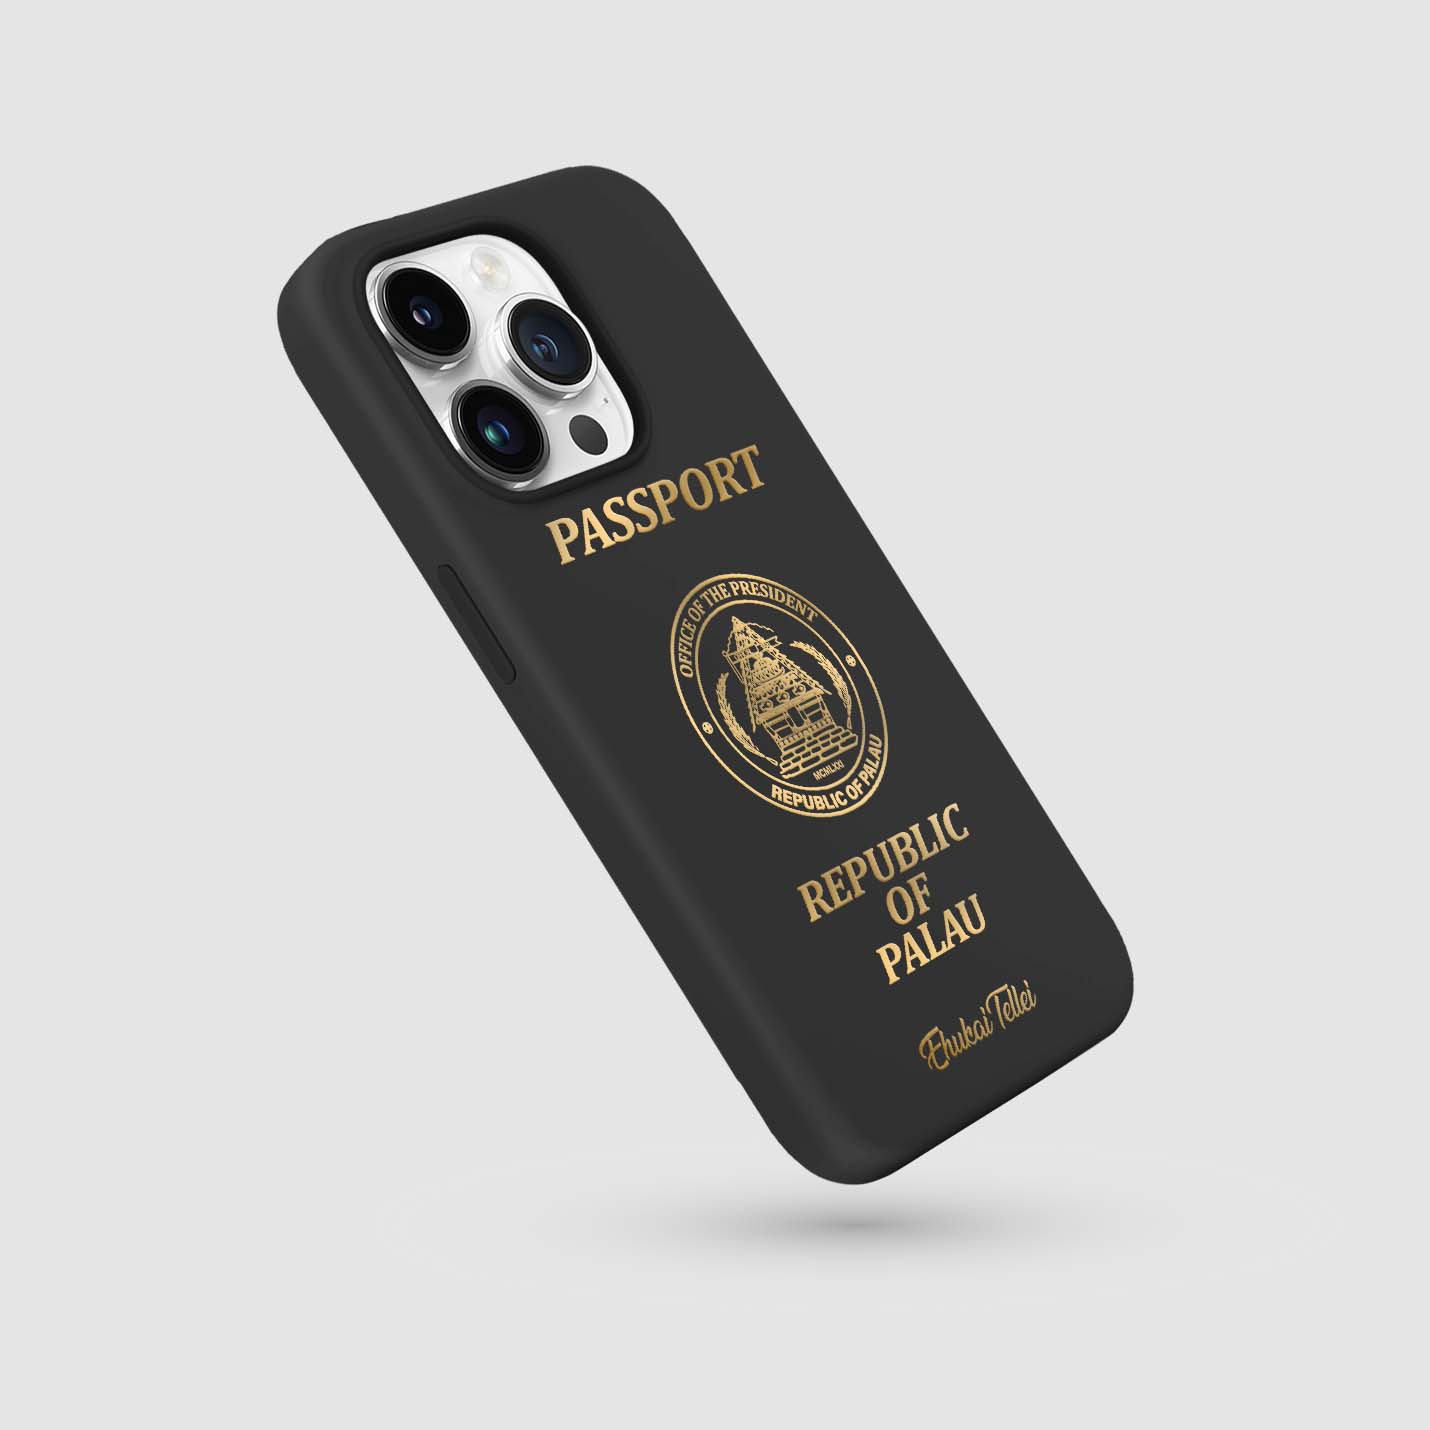 Handyhüllen mit Reisepass - Palau - 1instaphone